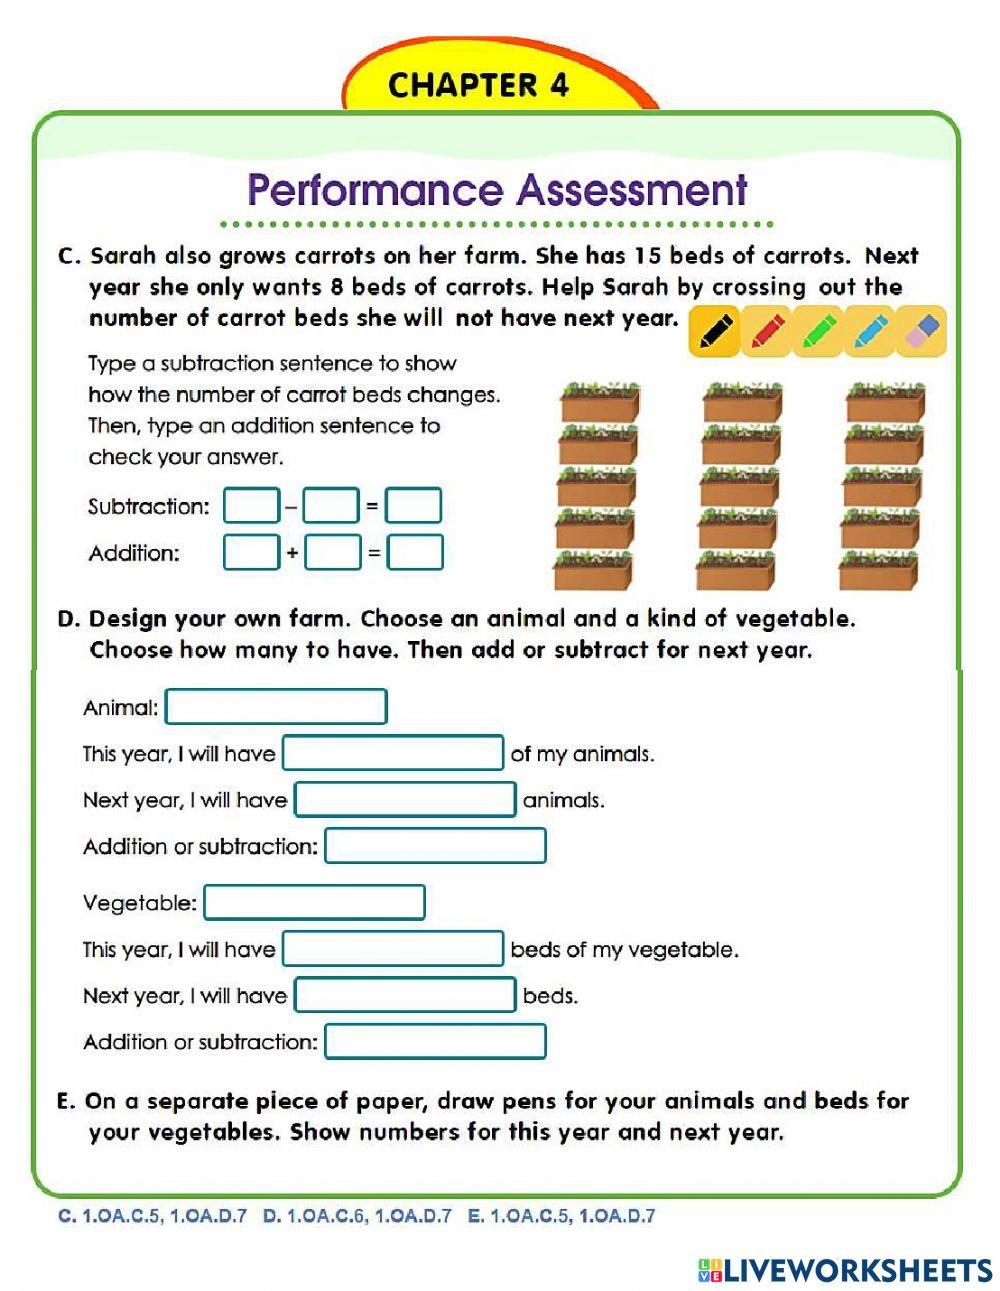 Chapter 4 Performance Assessment